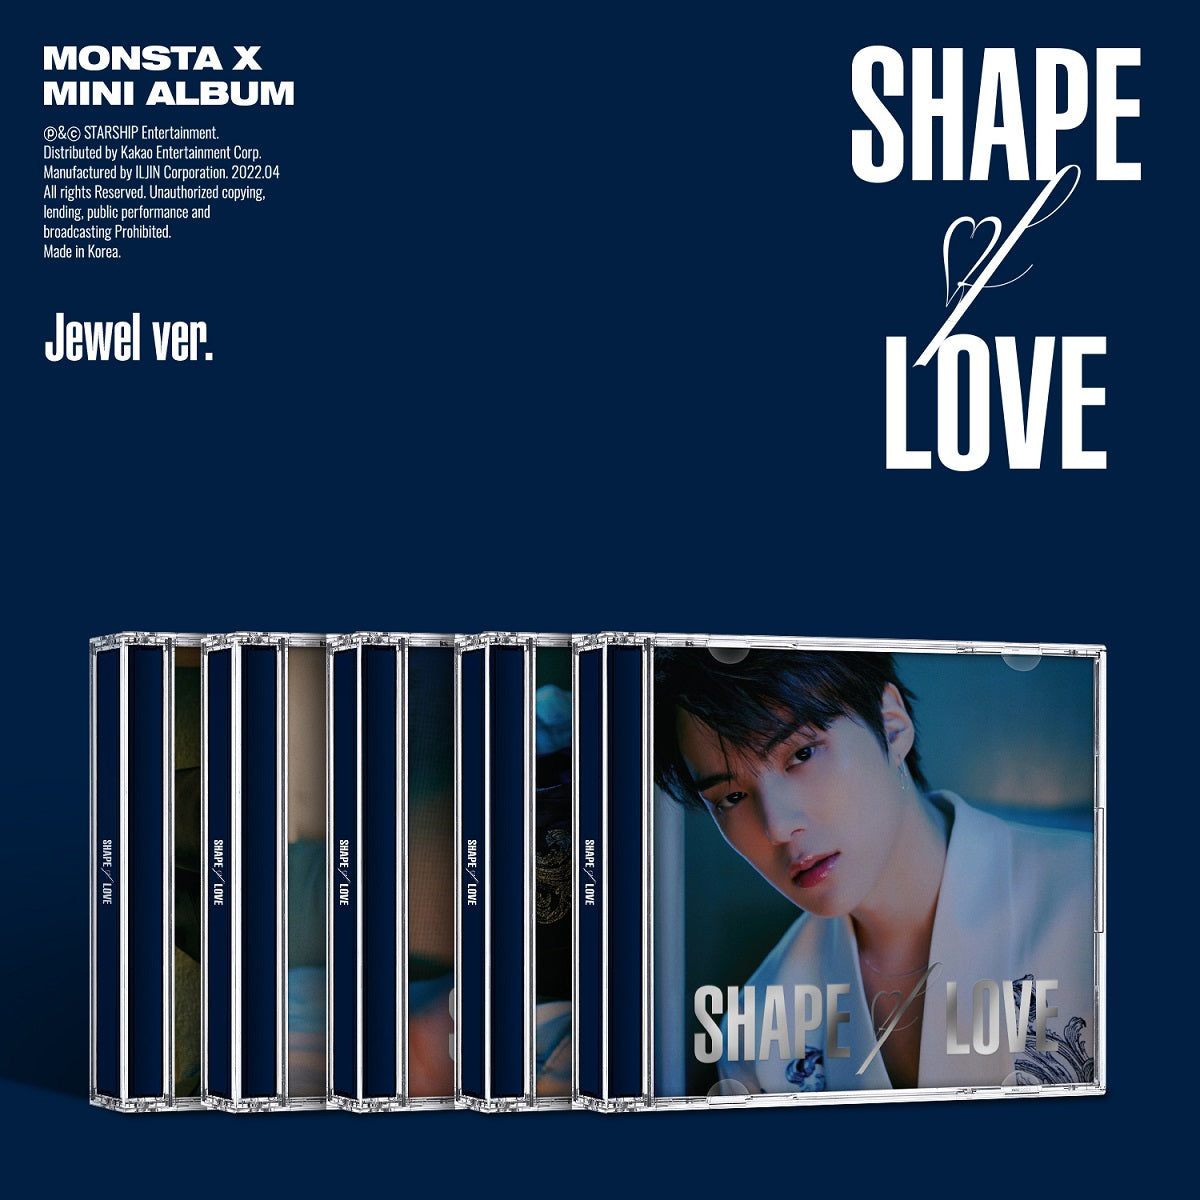 MONSTA X 11TH MINI ALBUM 'SHAPE OF LOVE' (JEWEL) COVER